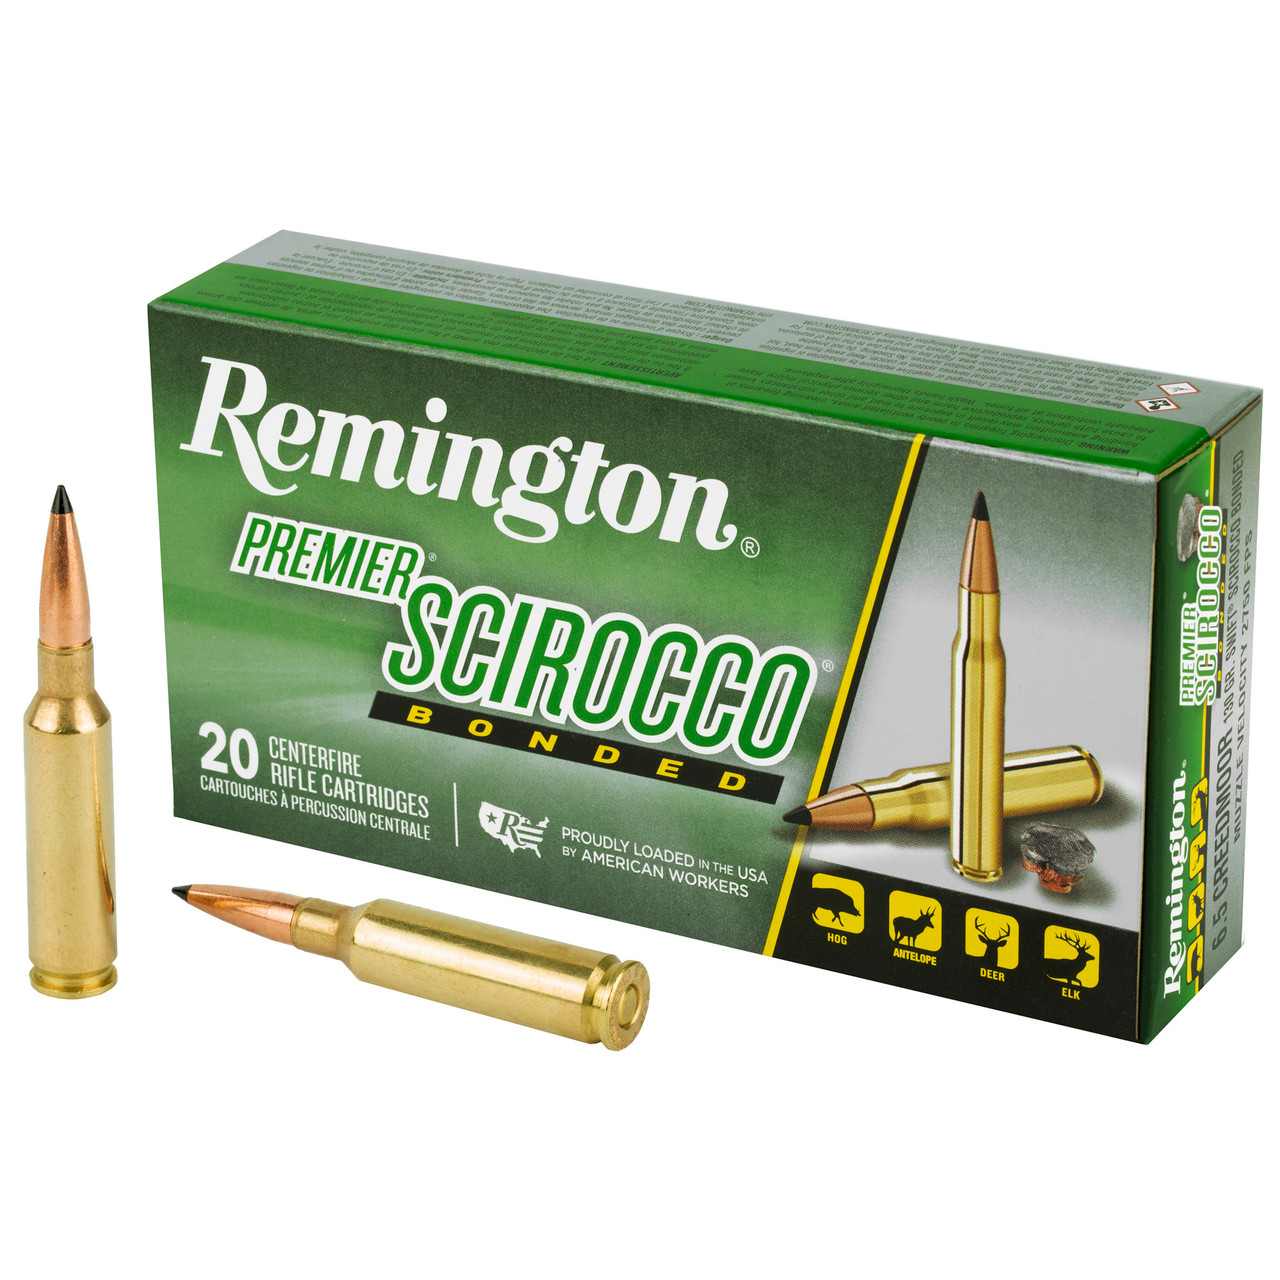 Remington 29344 Swift Scr 6.5 Cm 130gr 20/200